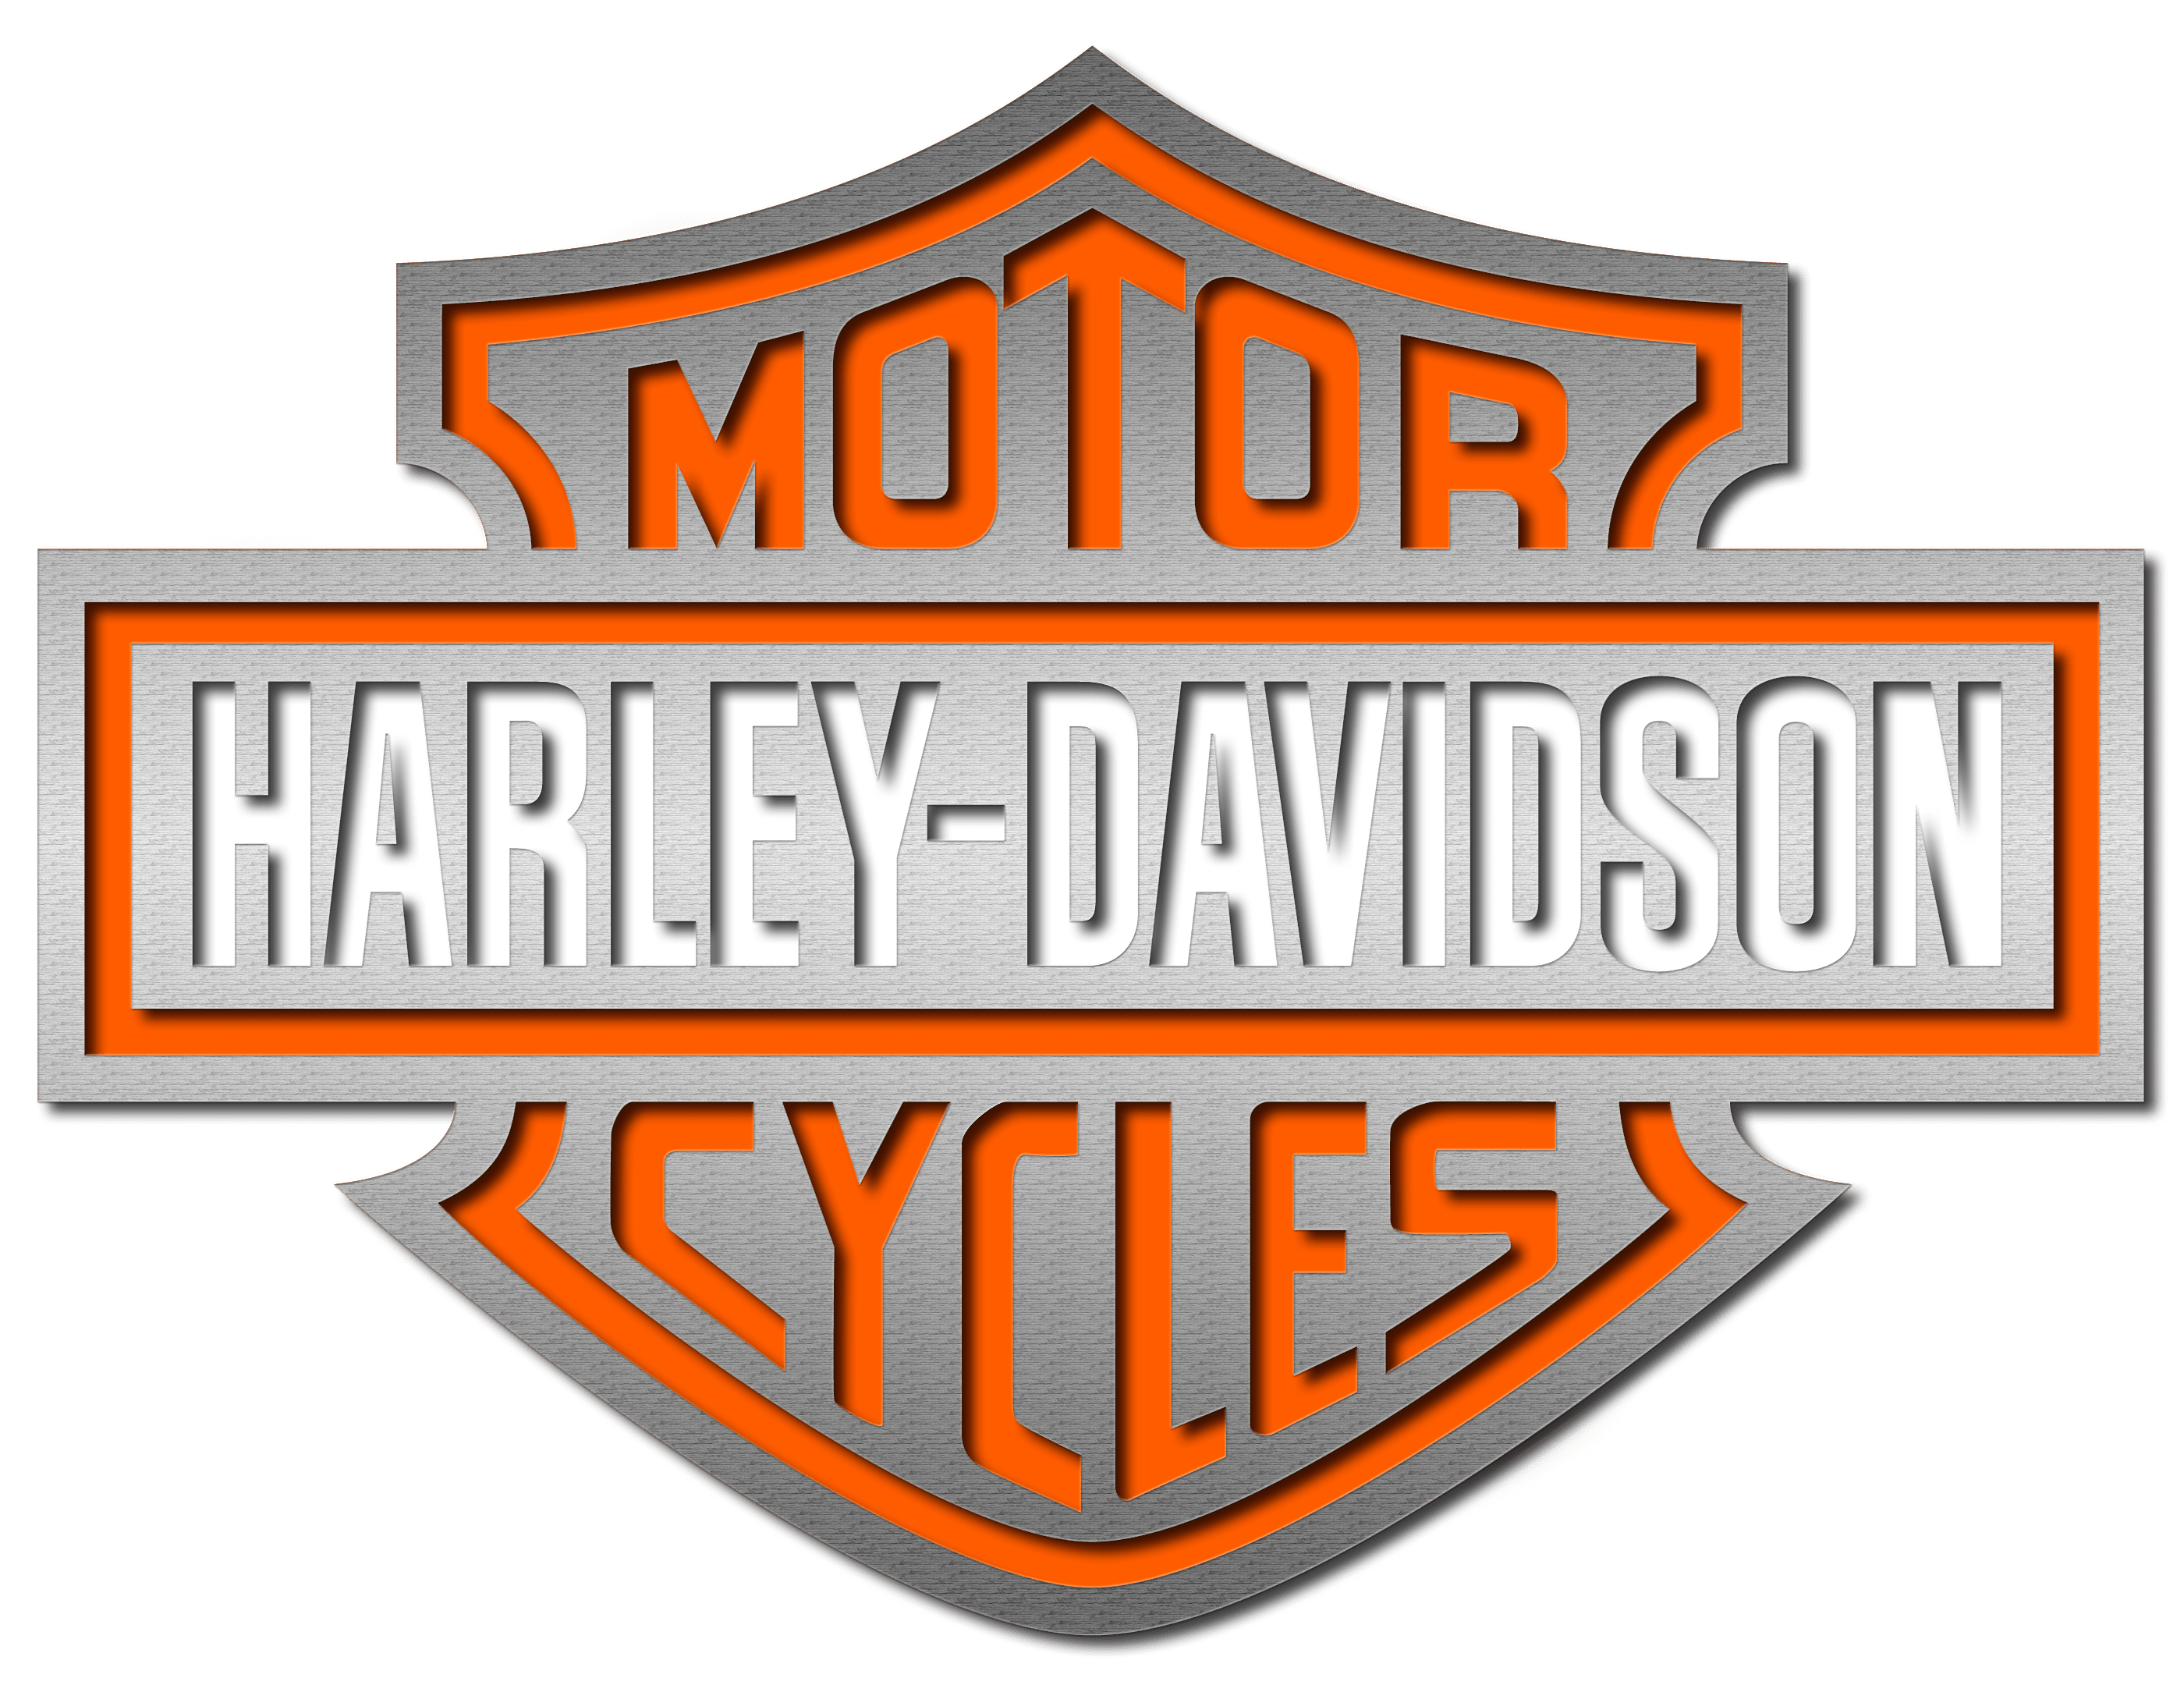 Harley Davidson Logo PNG Clipart